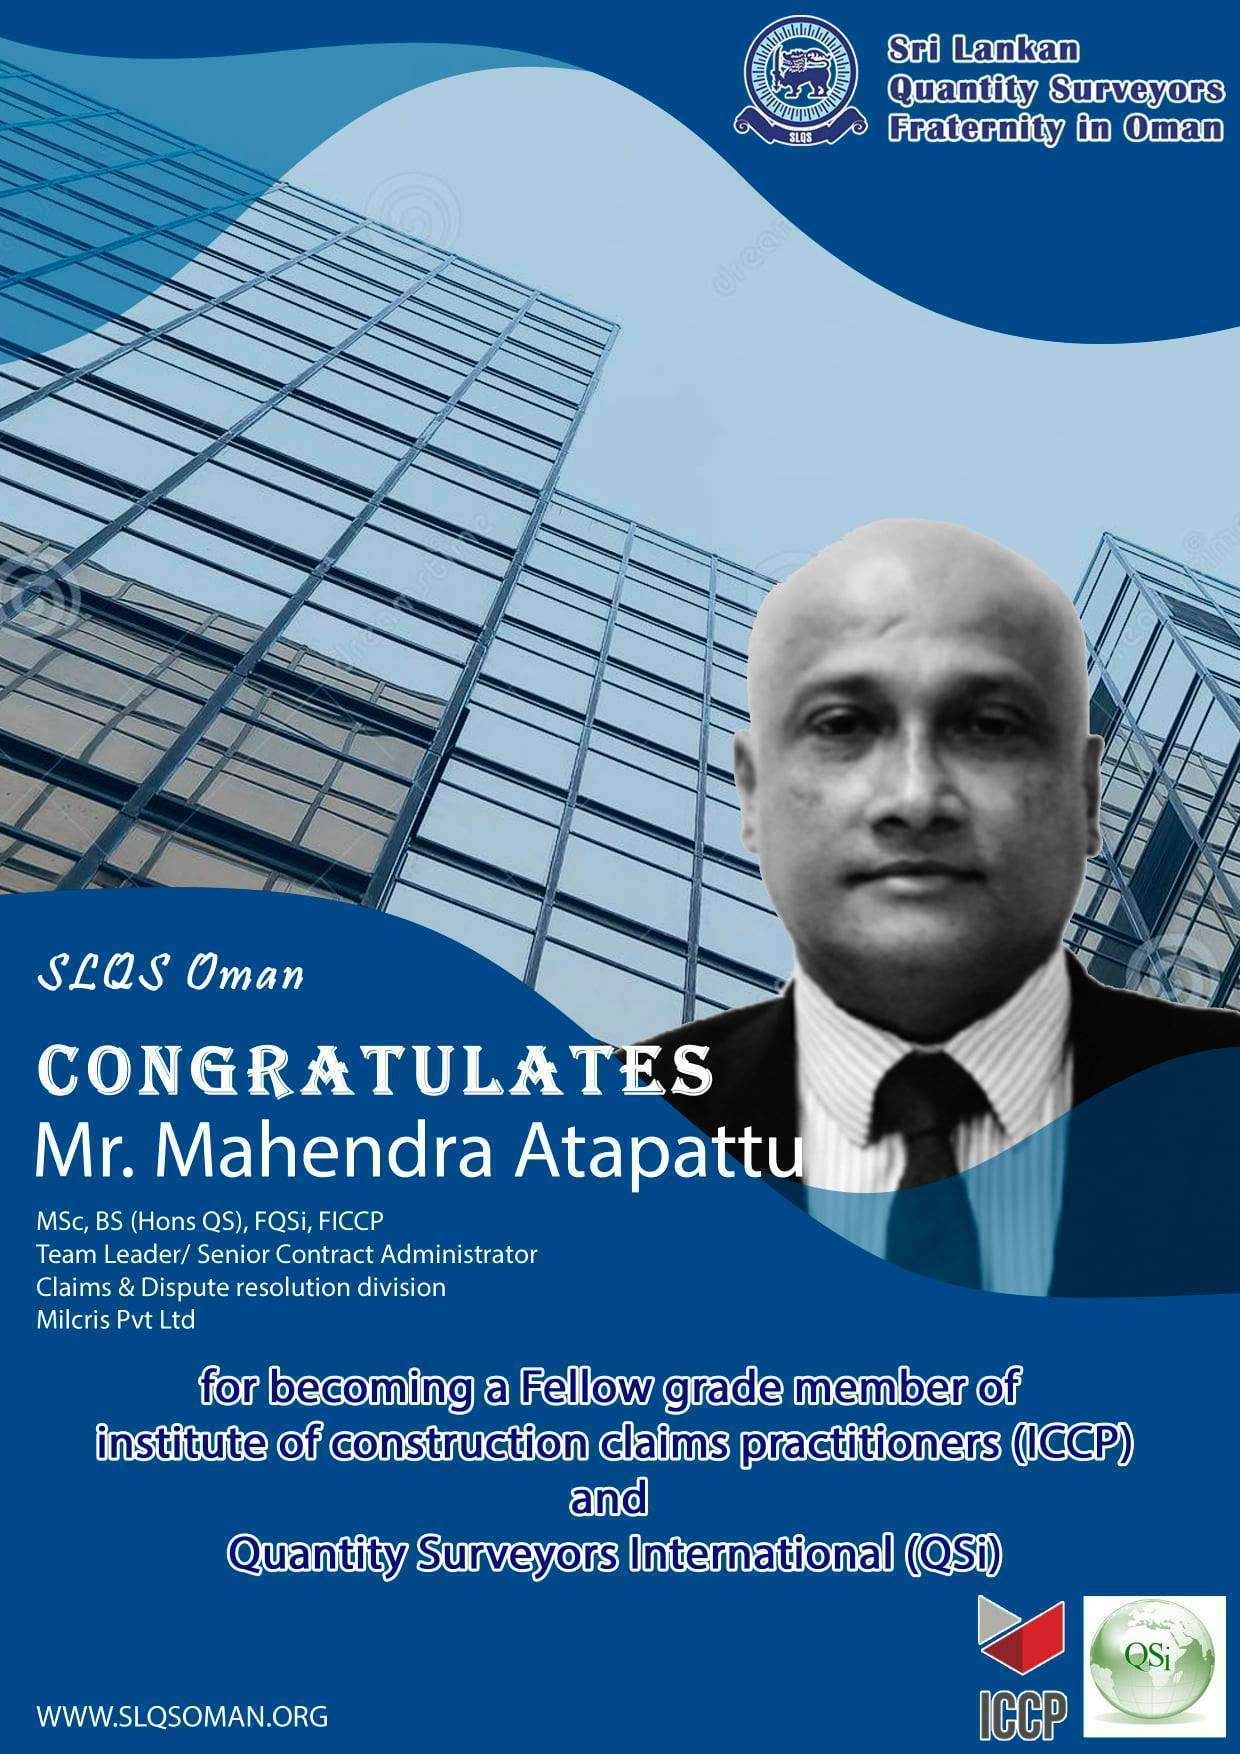 Congratulates Mr. Mahendra Atapattu !! For becoming a fellow grade member of ICCP & QSi